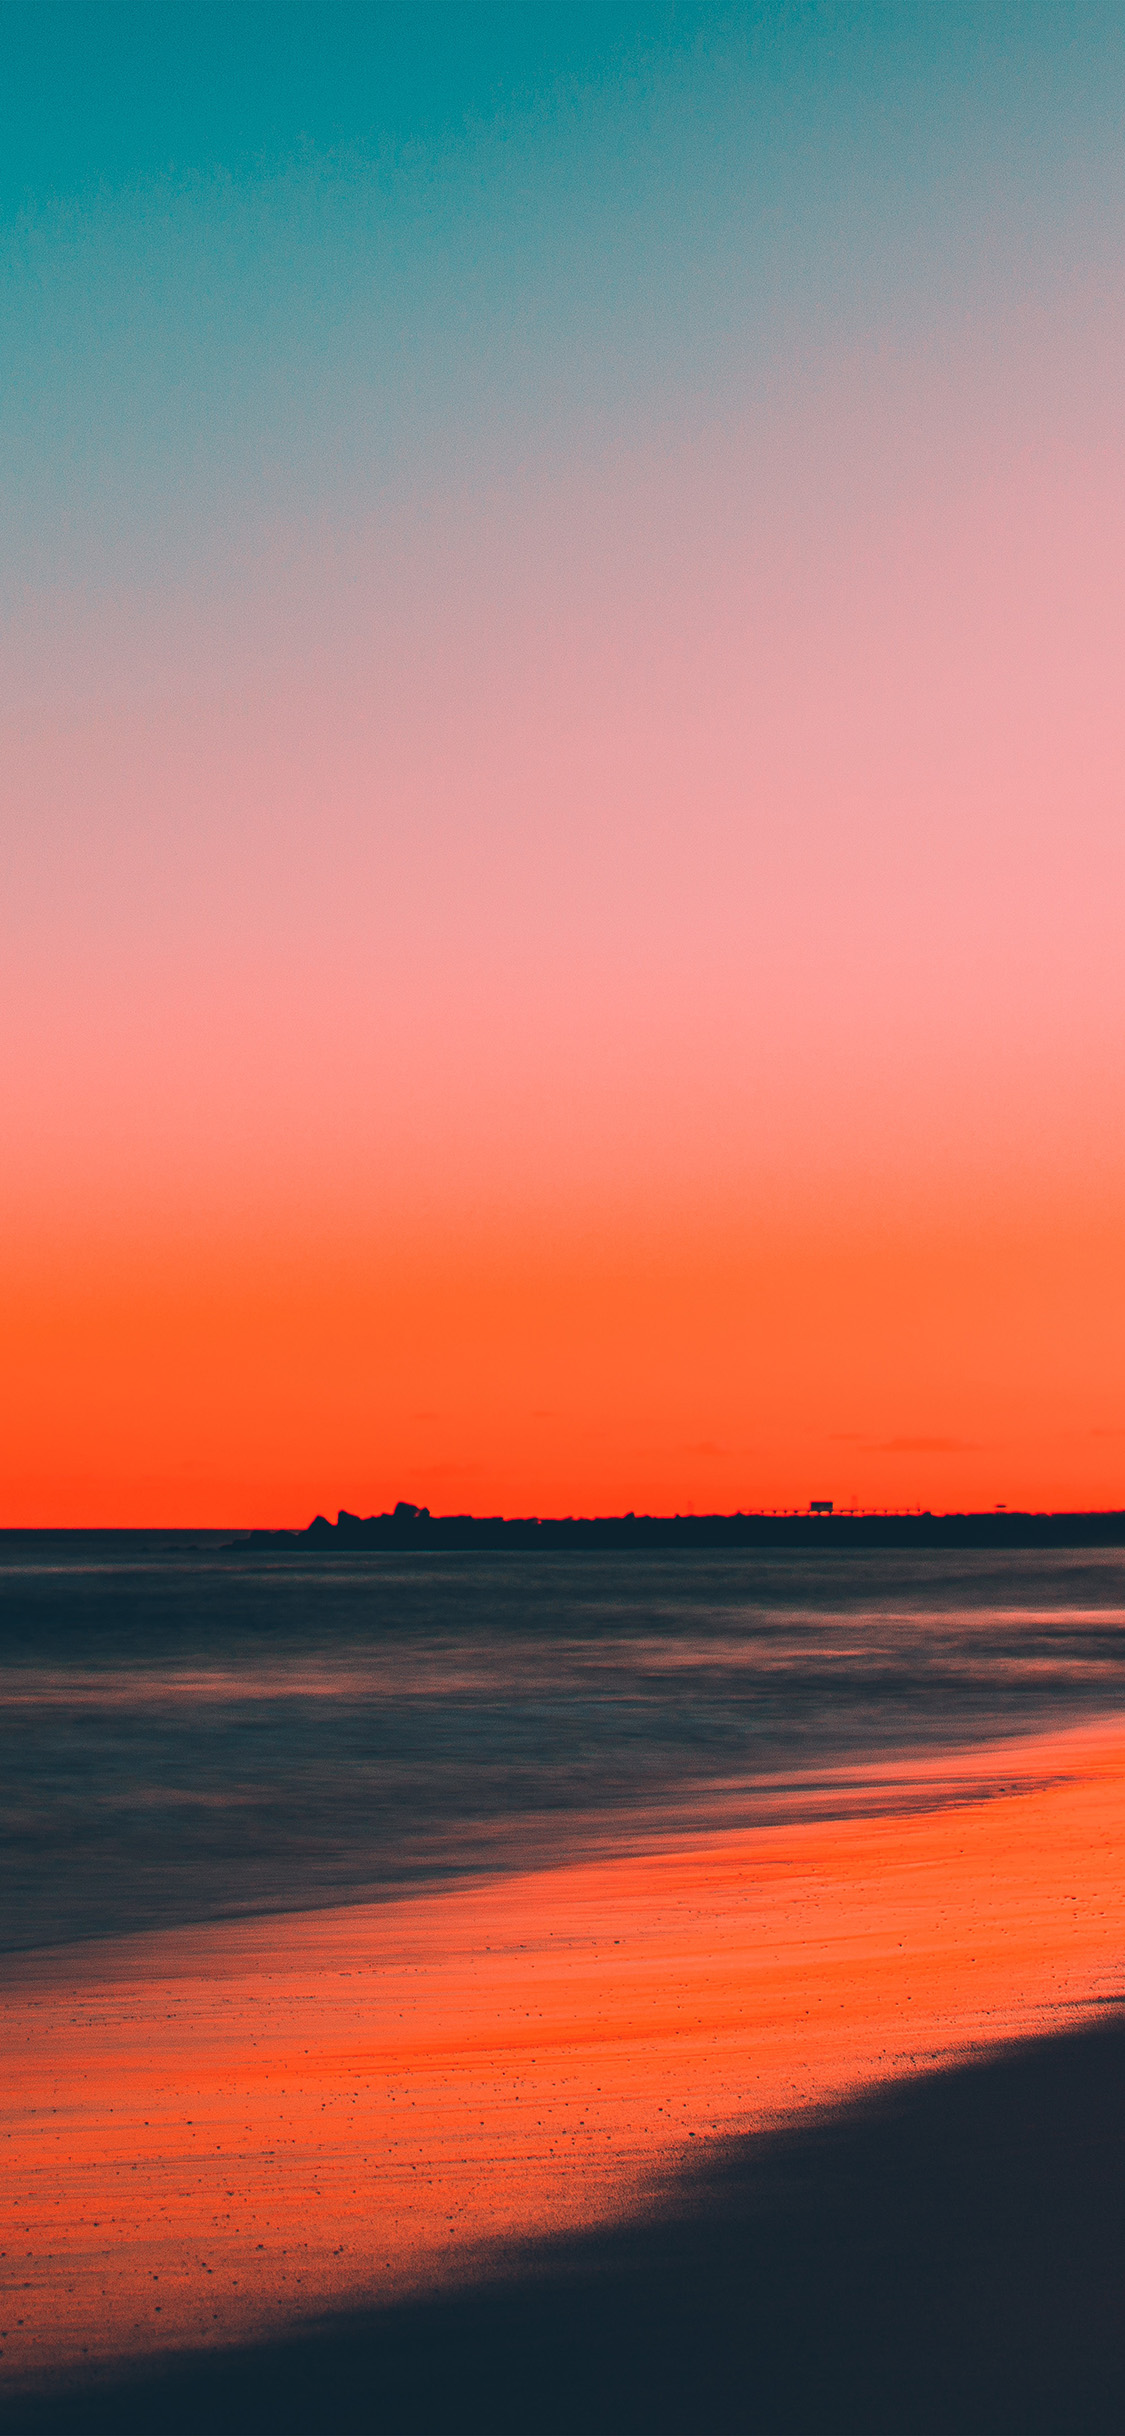 iPhone X wallpaper. sunset beach fall night sea nature